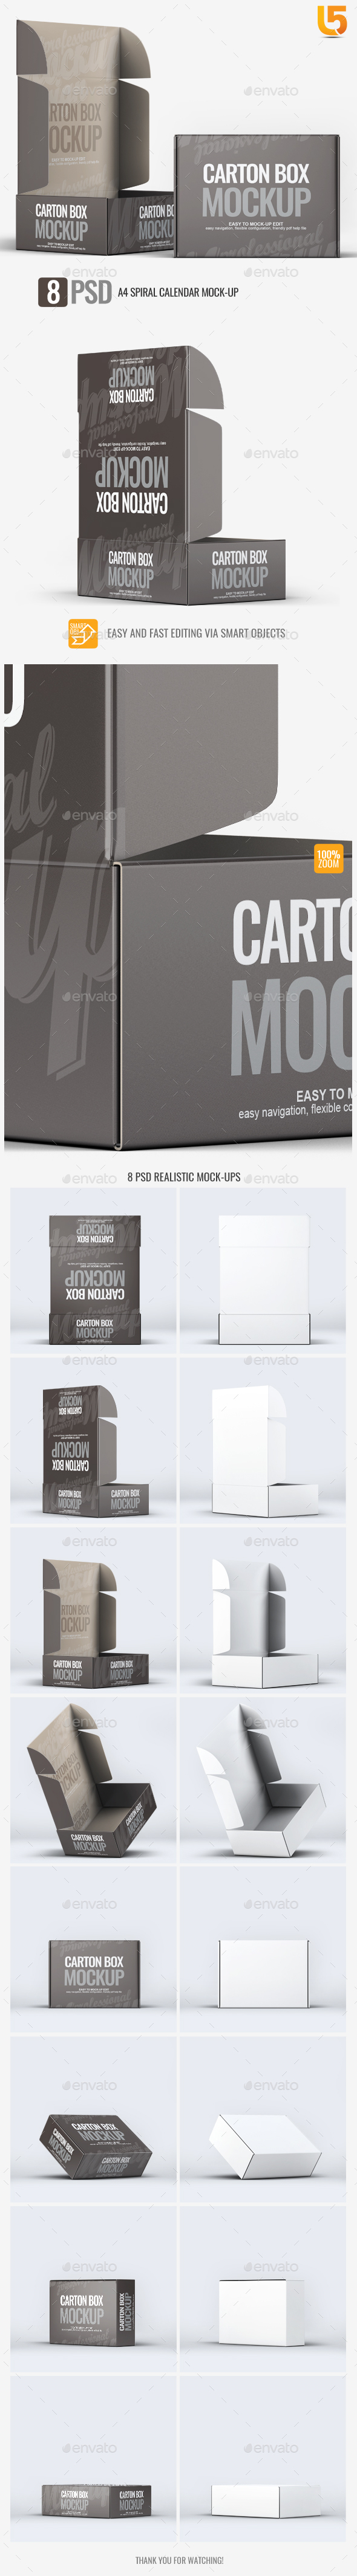 Download Carton Box Mock Up By L5design Graphicriver